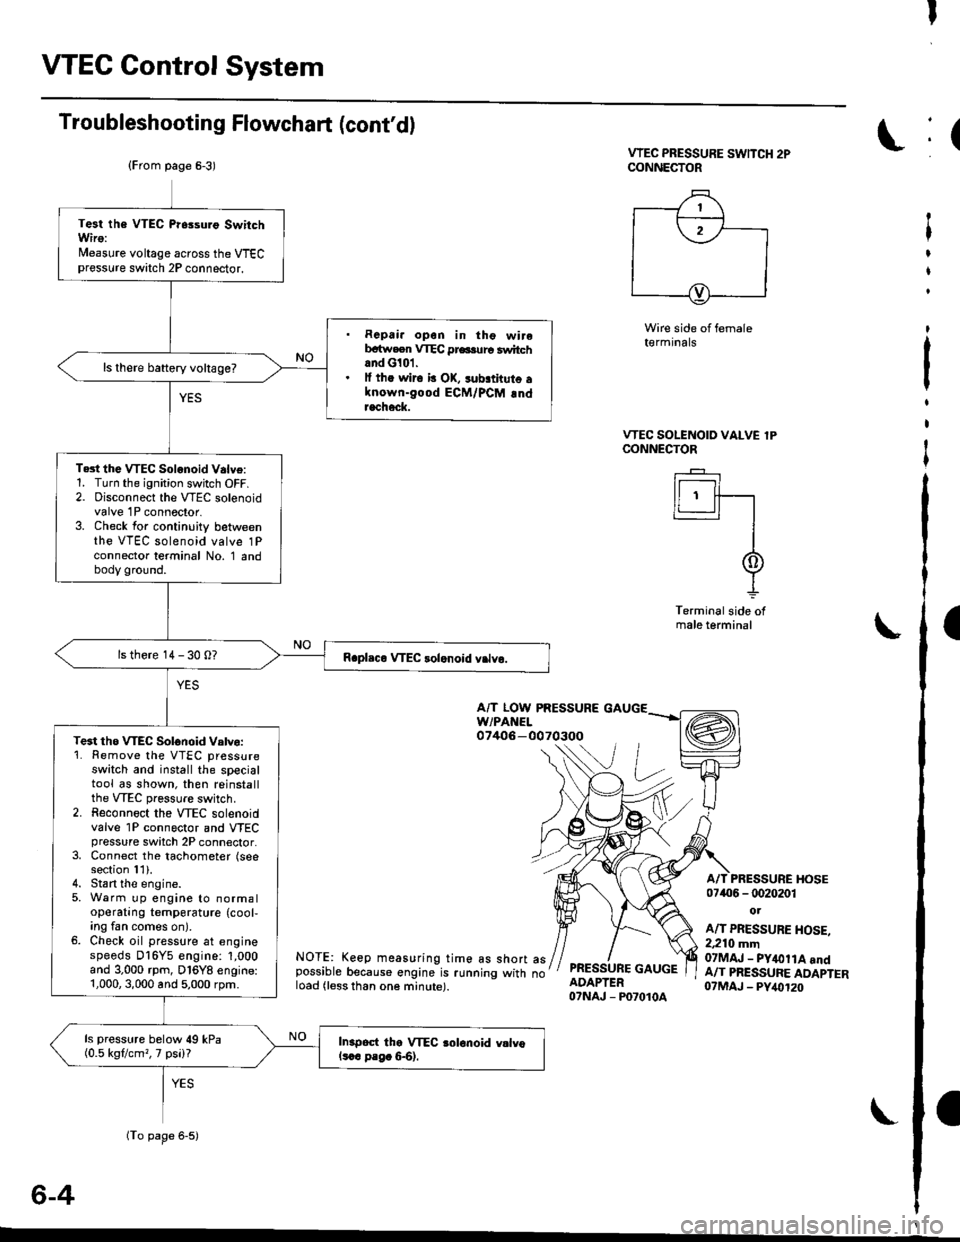 HONDA CIVIC 1996 6.G Owners Manual I
VTEC Control System
Troubleshooting Flowchart (contd)
VTEC PRESSURE SwlTCH 2PCONNECTOR
Wire side of female(€rmrnats
VTEC SOLENOID VALVE lPCONNECTOR
I r----t I
ll  ff---r�-�1
I
I
-L
Terminal s